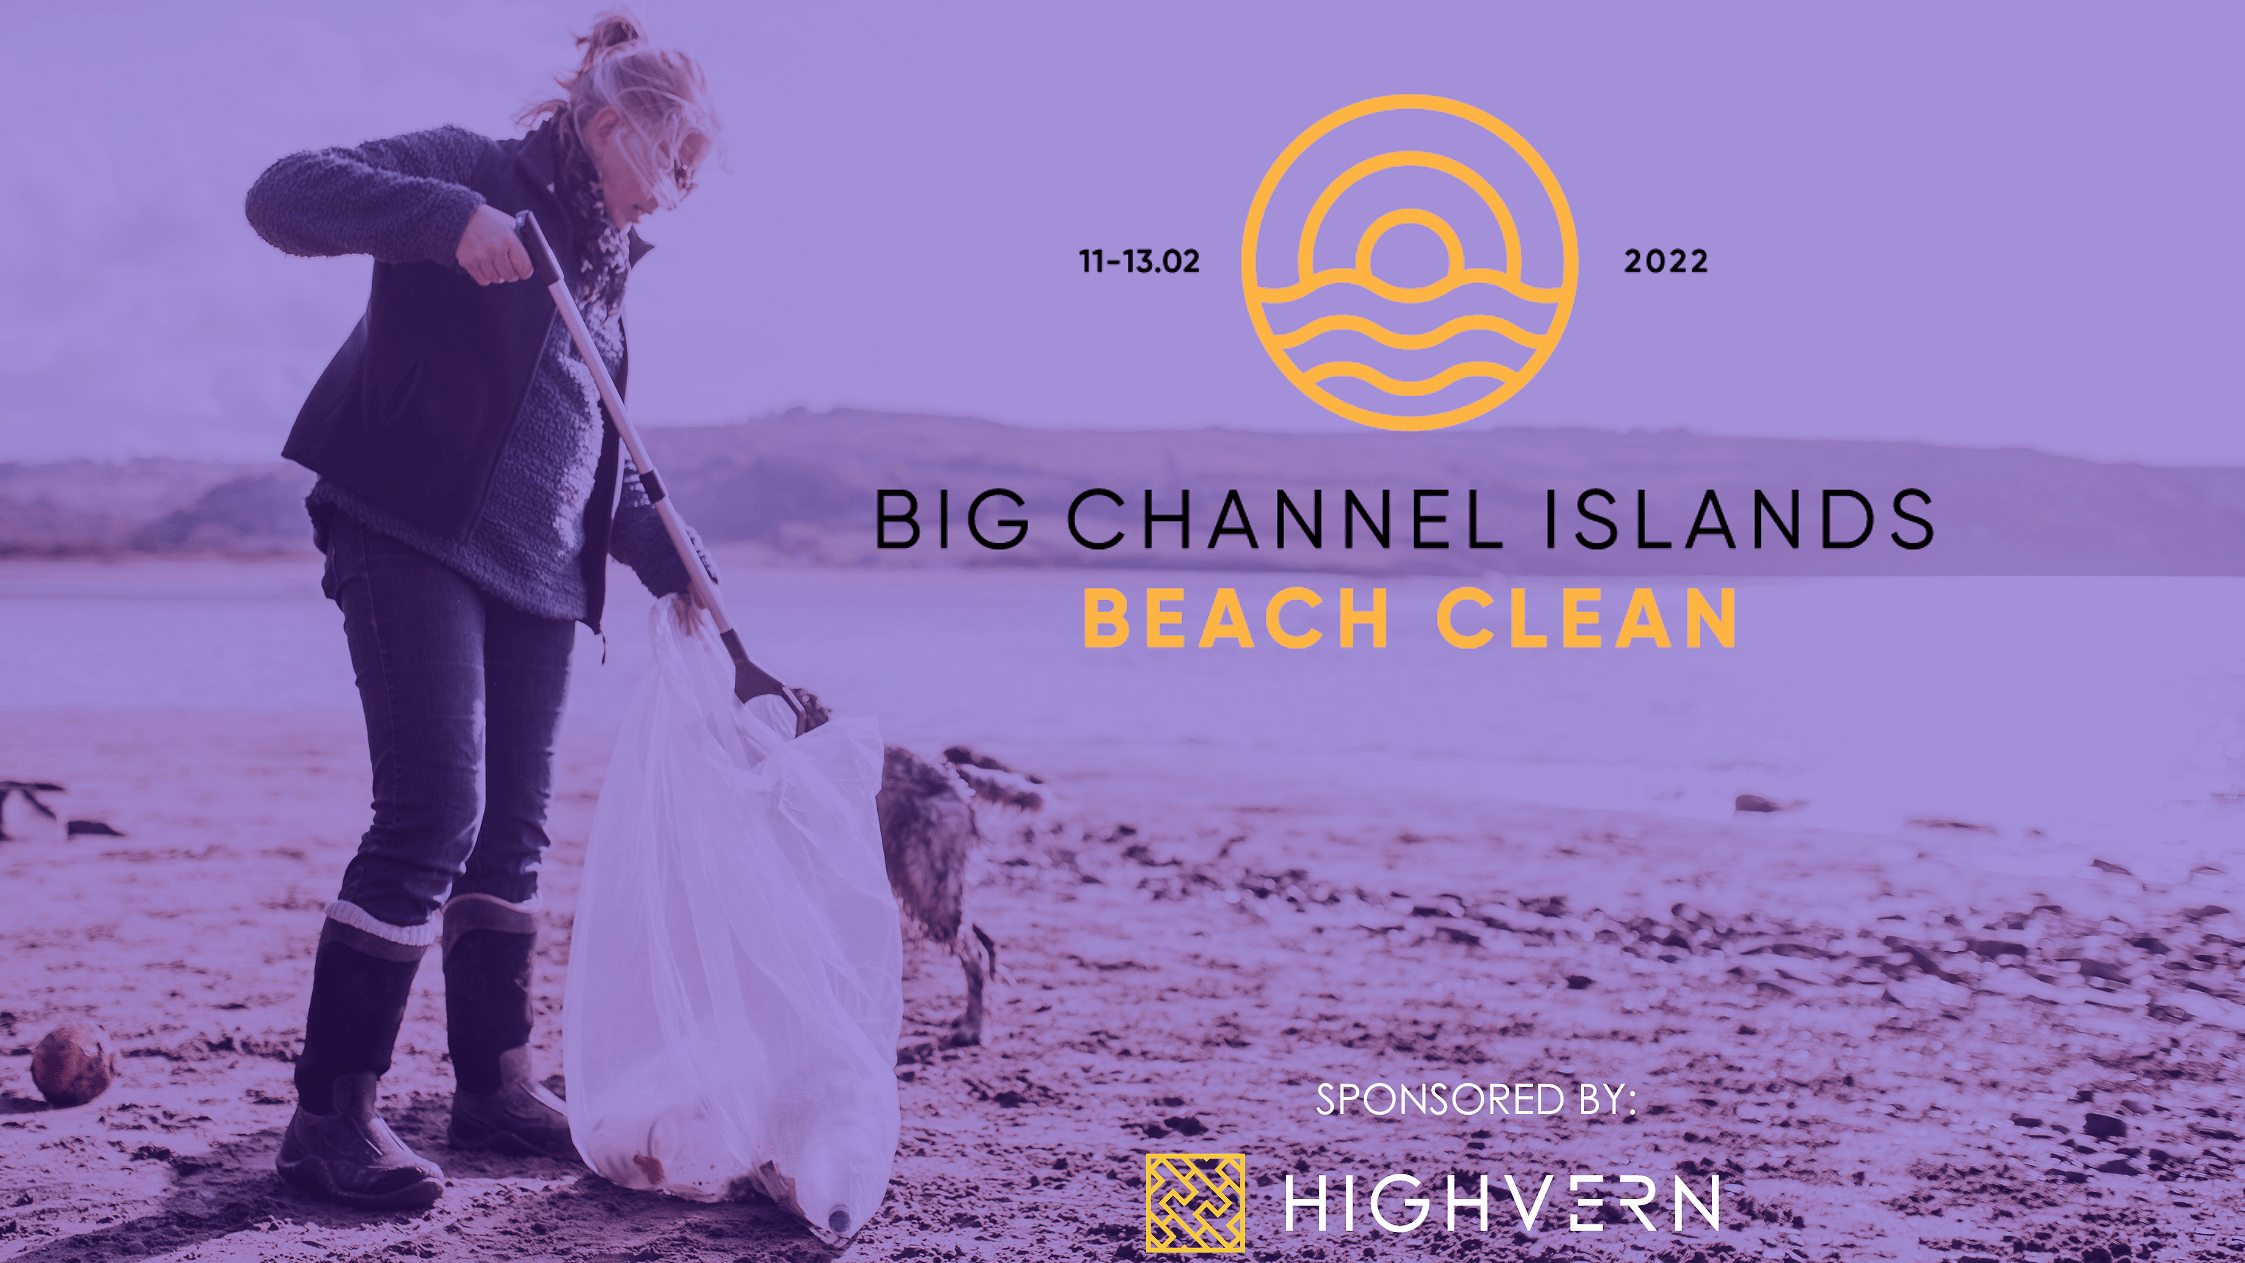 Big Channel Islands beach clean 2020 01 16-9